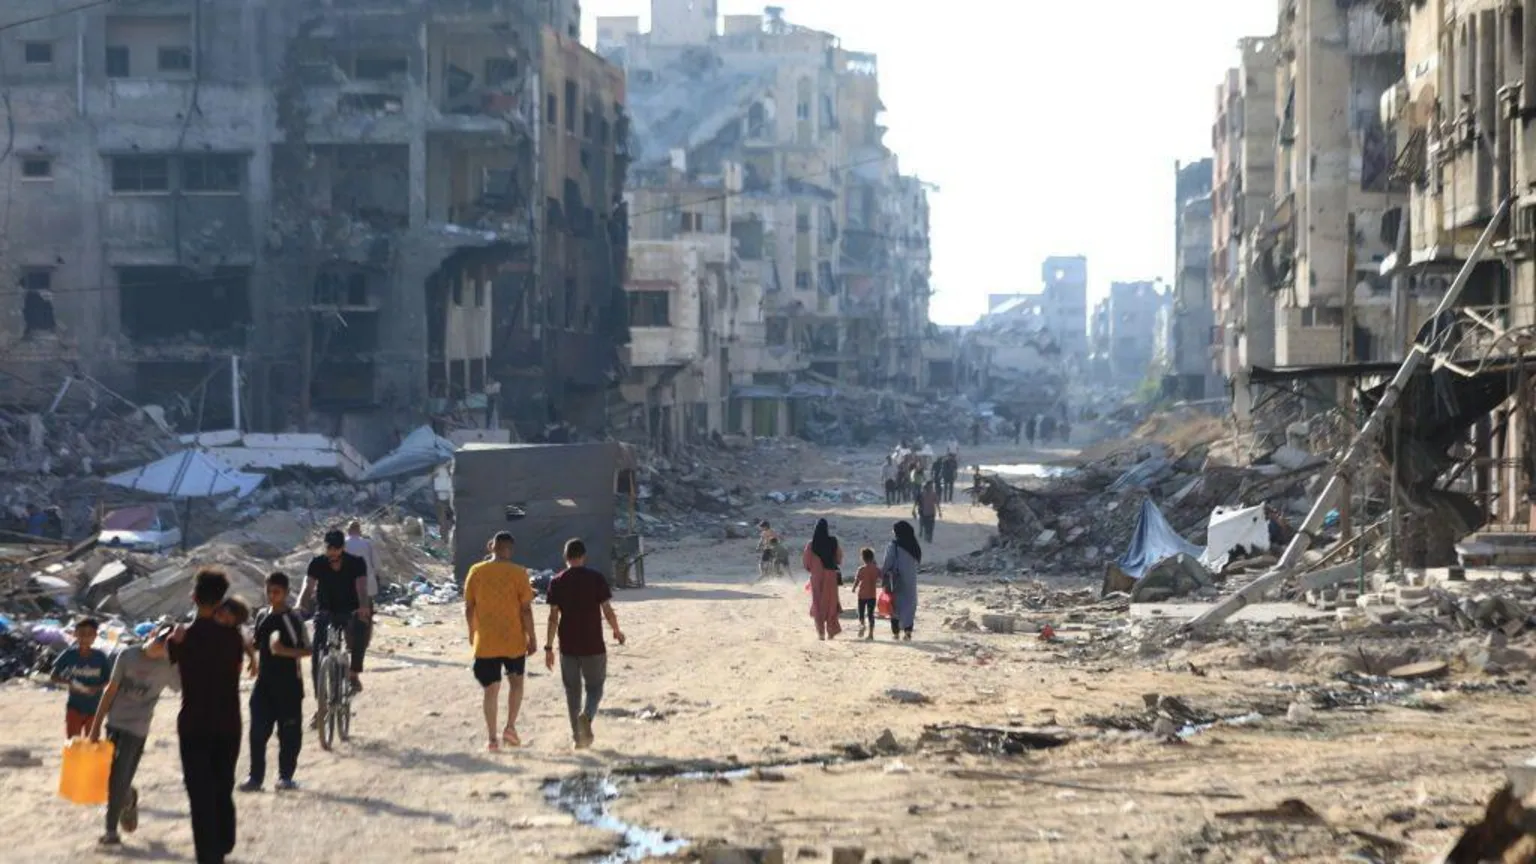 Israel military tells Gaza City residents to leave (bbc.com)